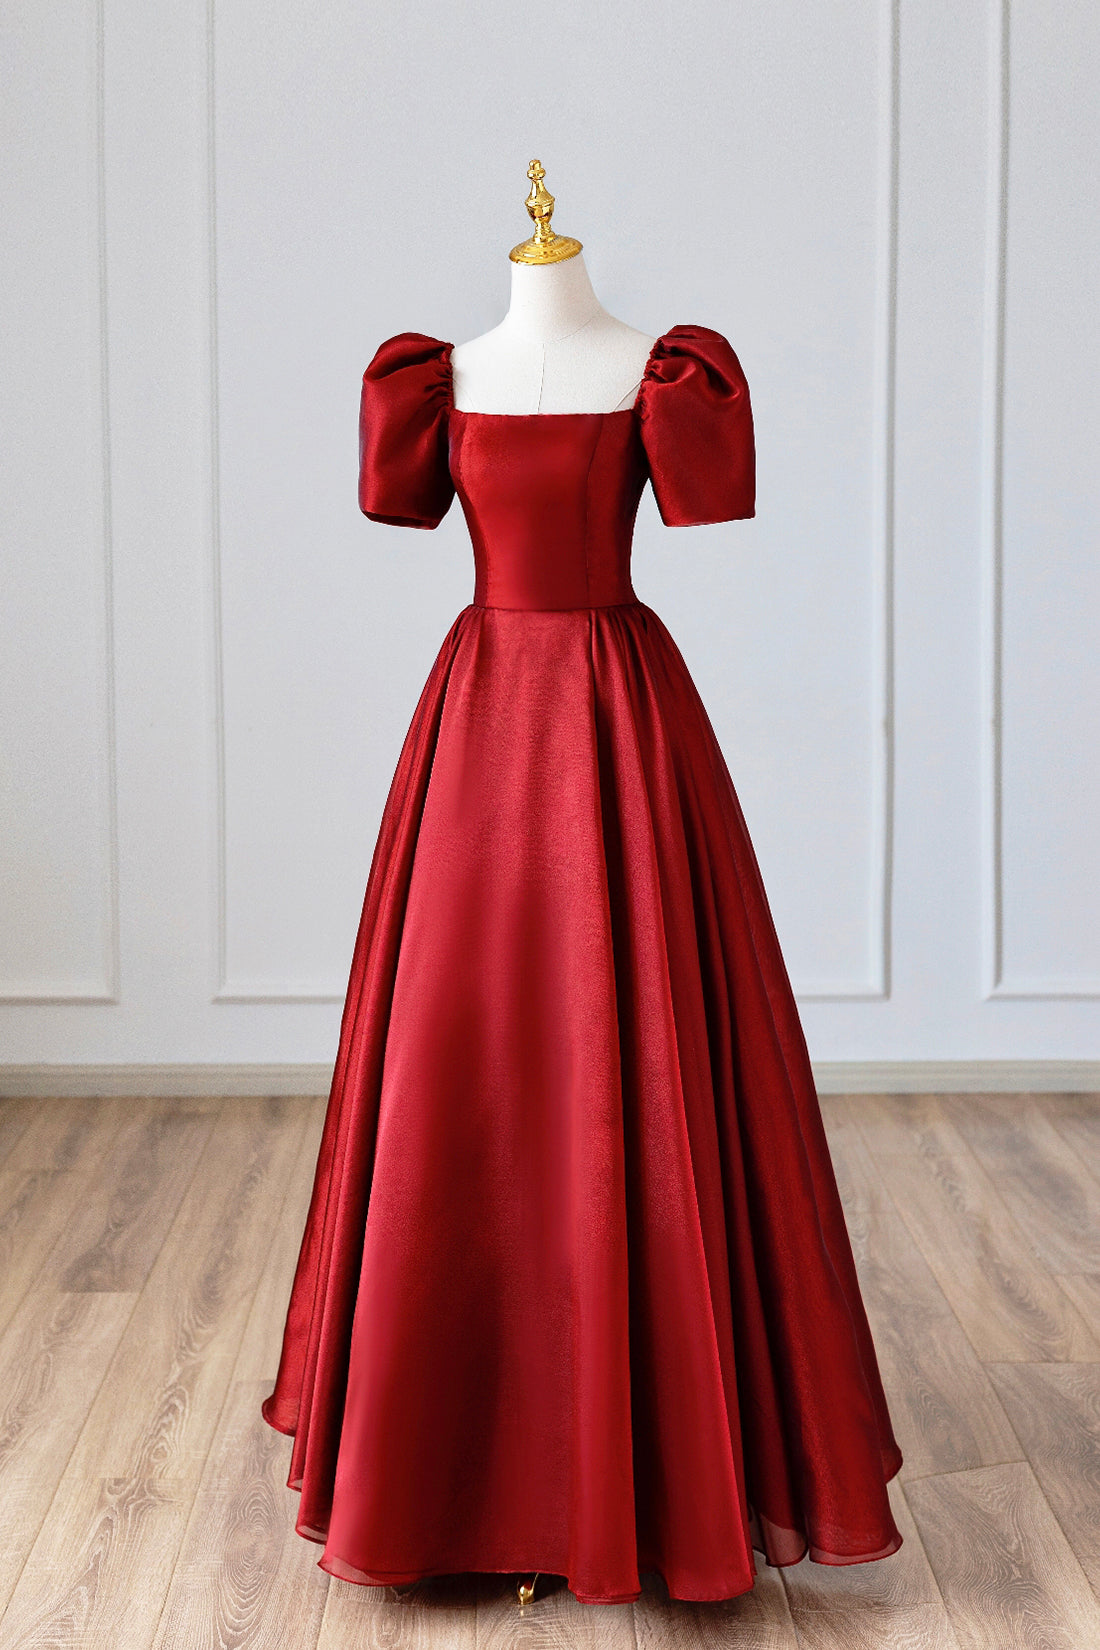 Burgundy Satin Long Prom Dress, Simple A-Line Short Sleeve Evening Dress